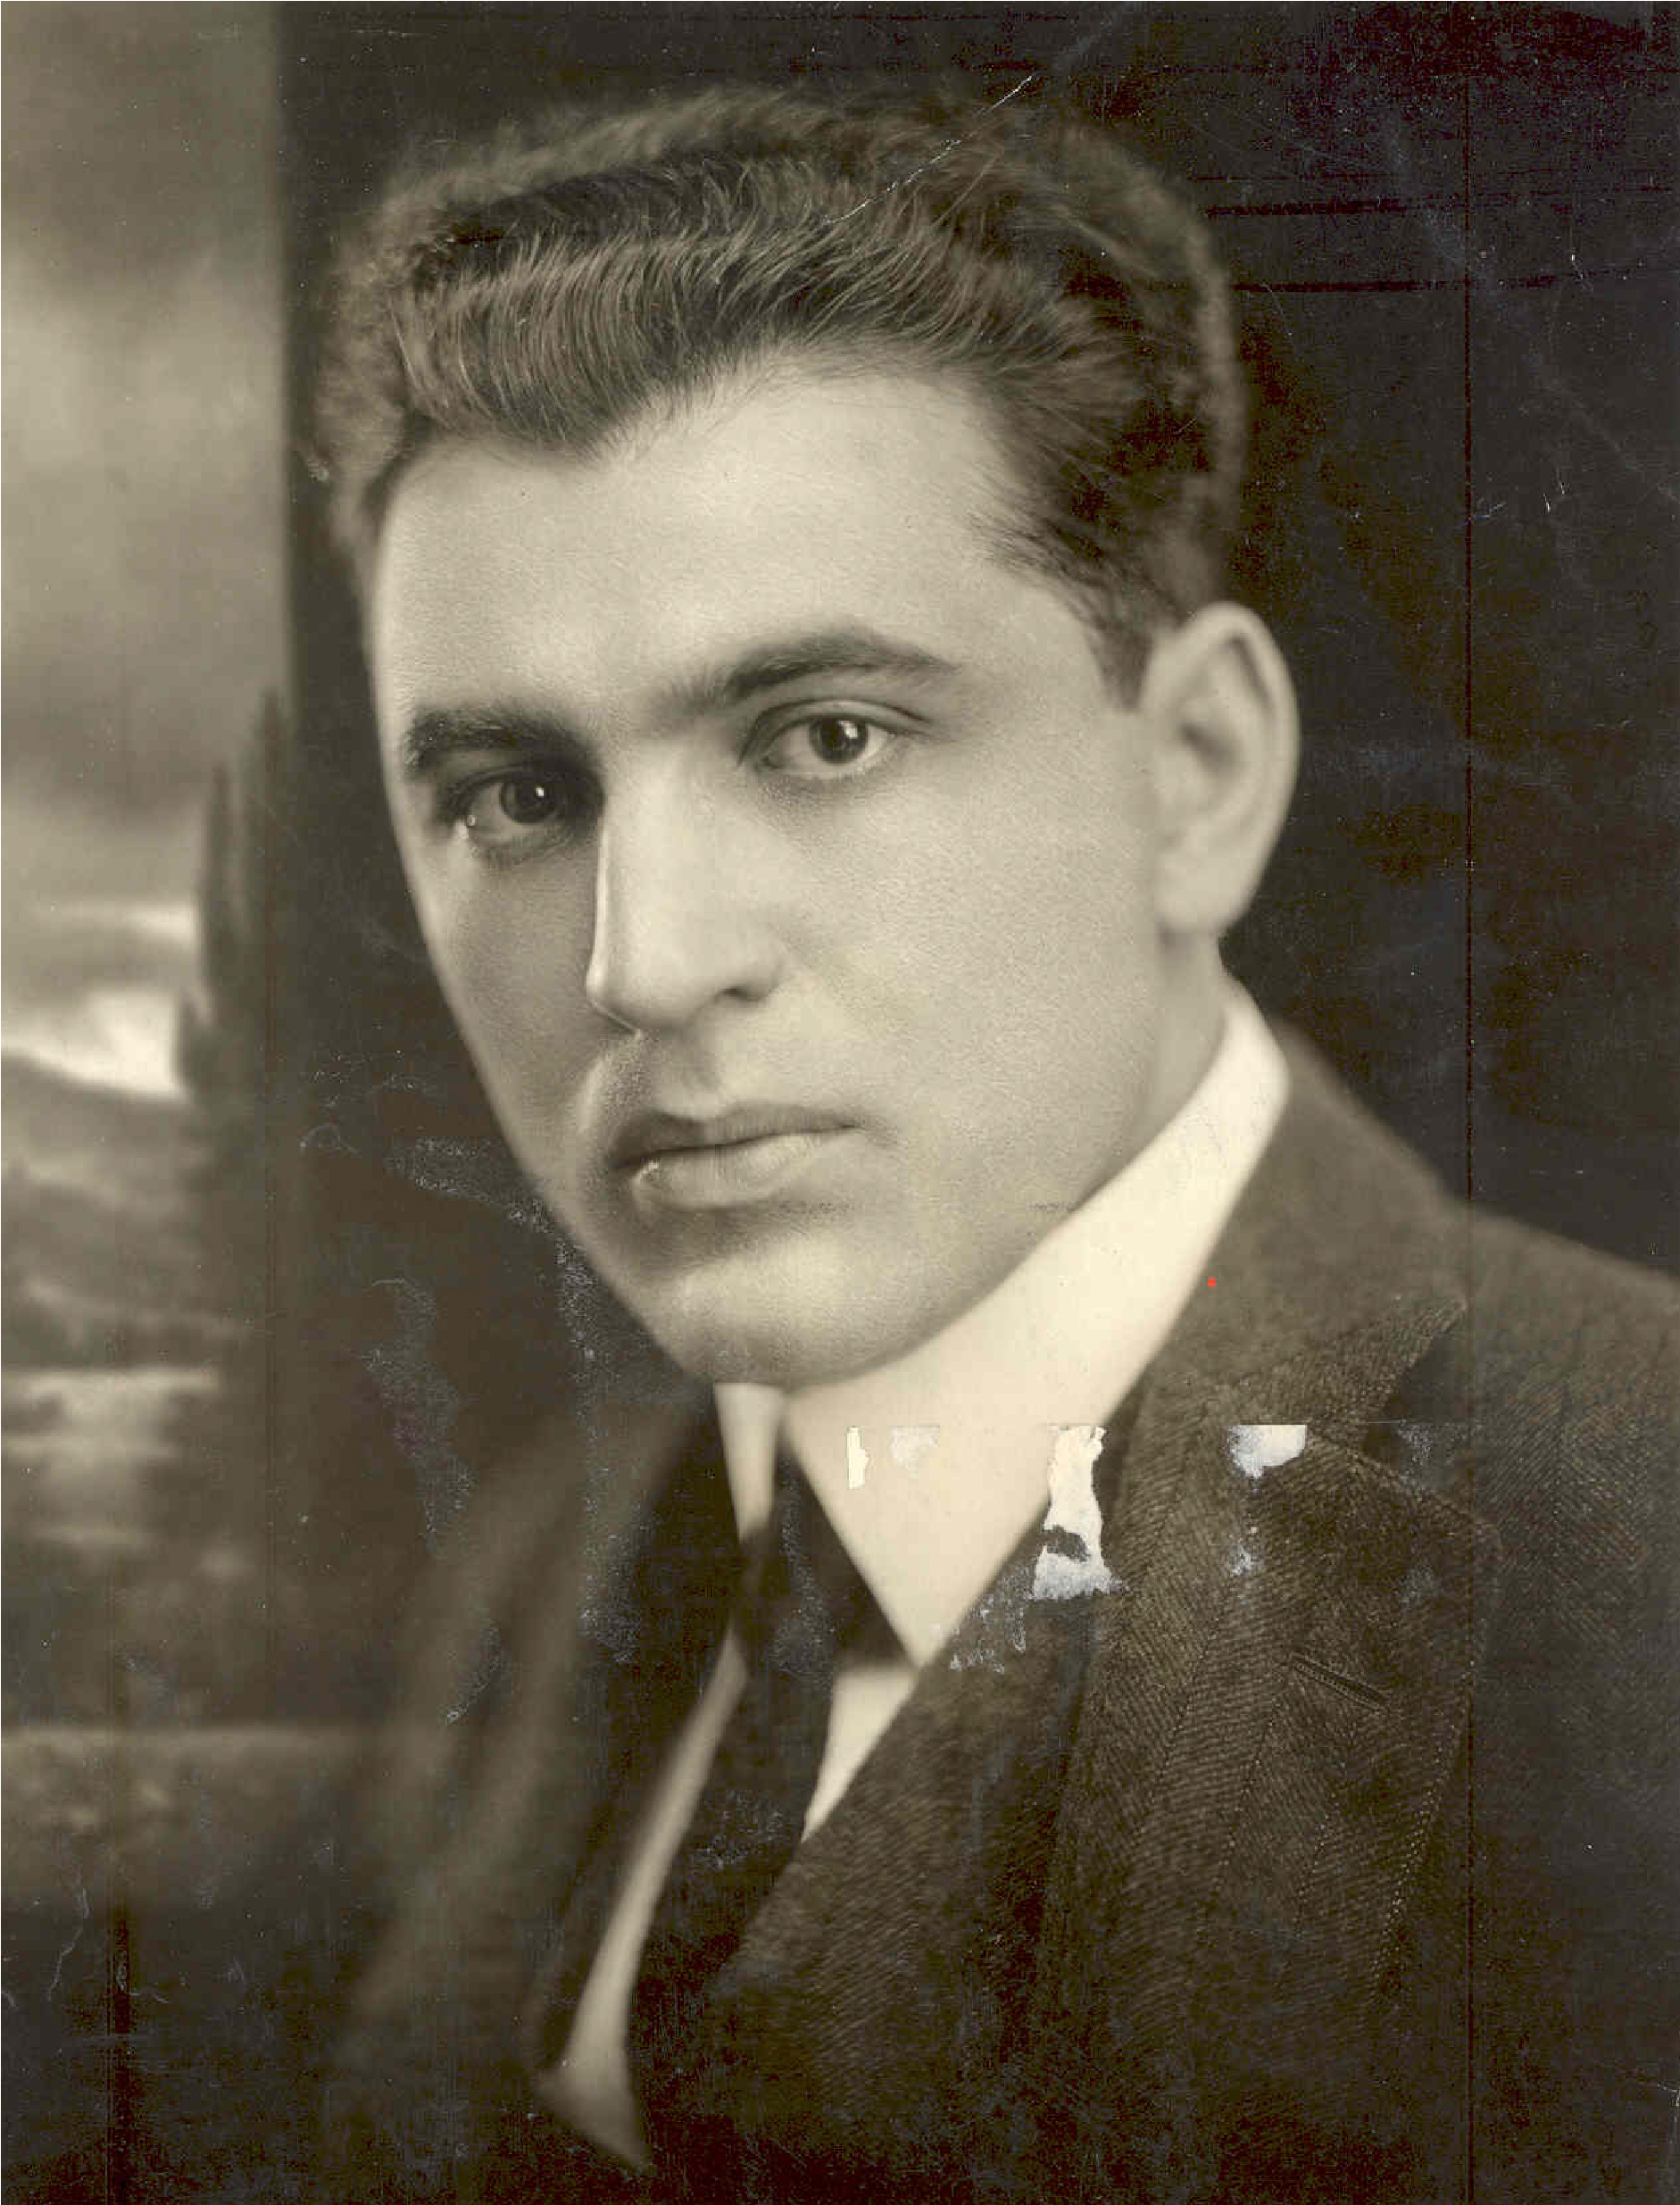 Rabbi Abba Hillel Silver, 1893-1963